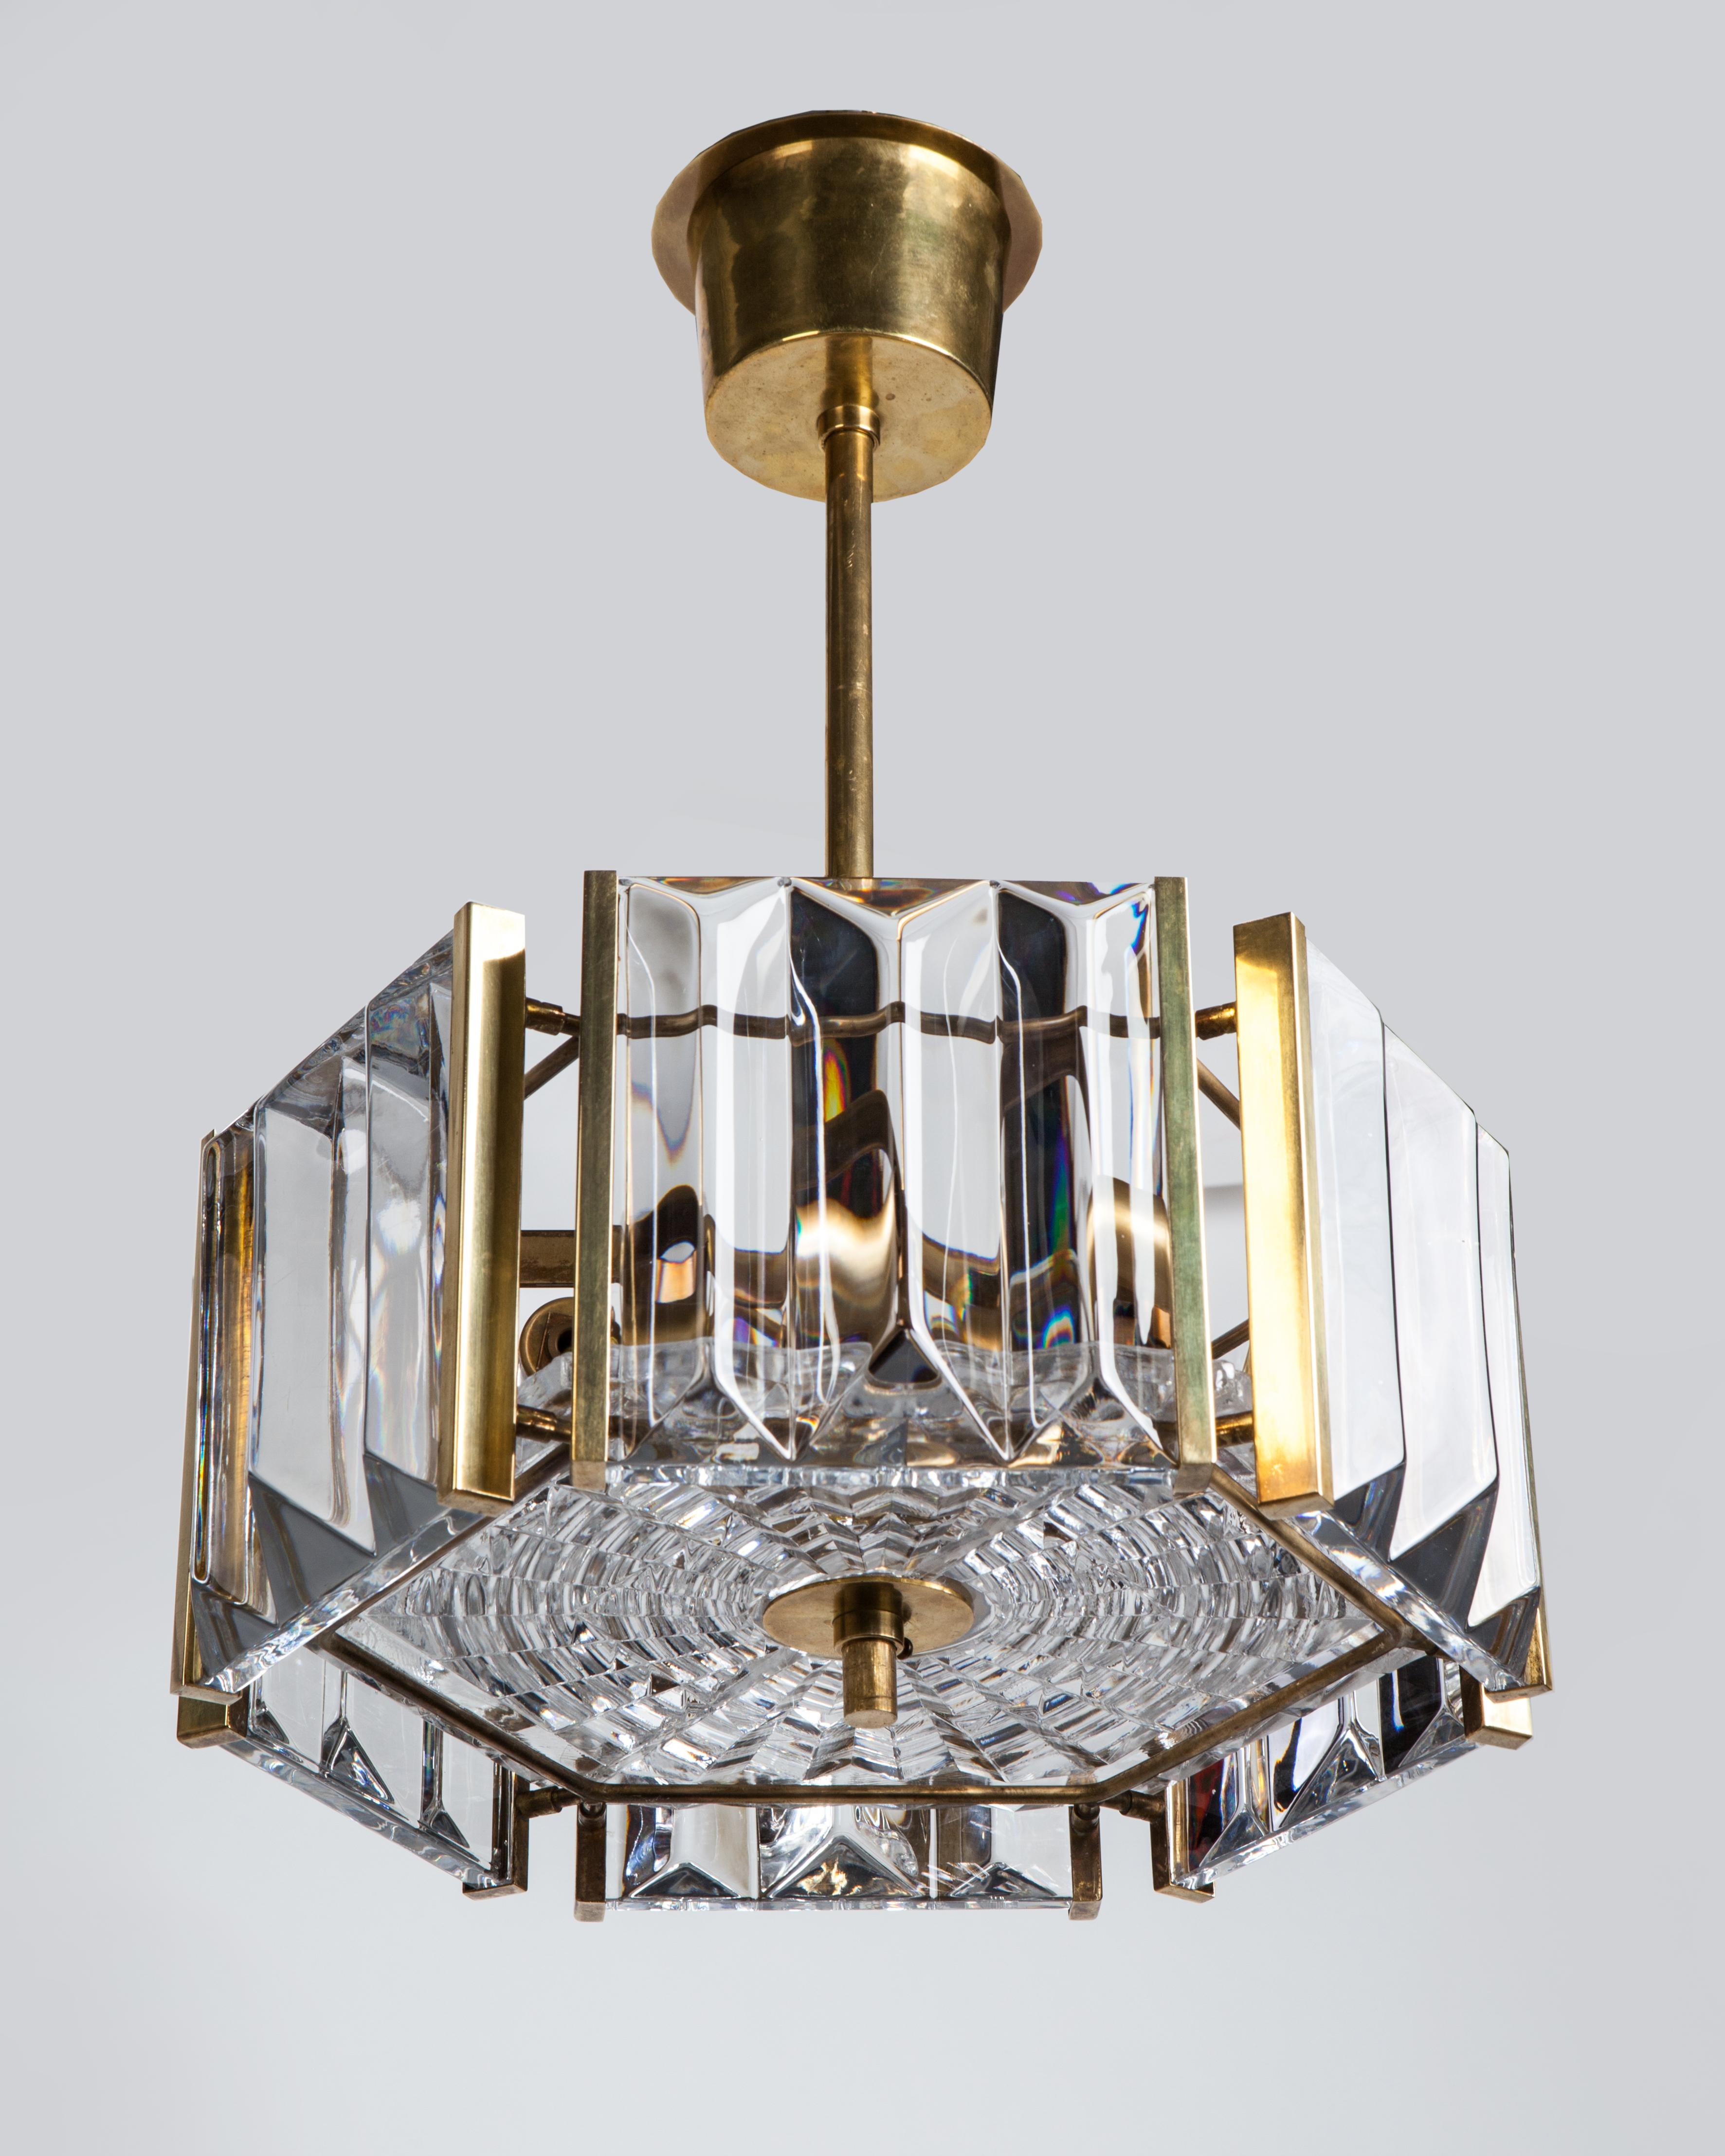 Mid-20th Century Scandinavian Modern Pendant by Carl Fagerlund for Swedish Glassmaker Orrefors